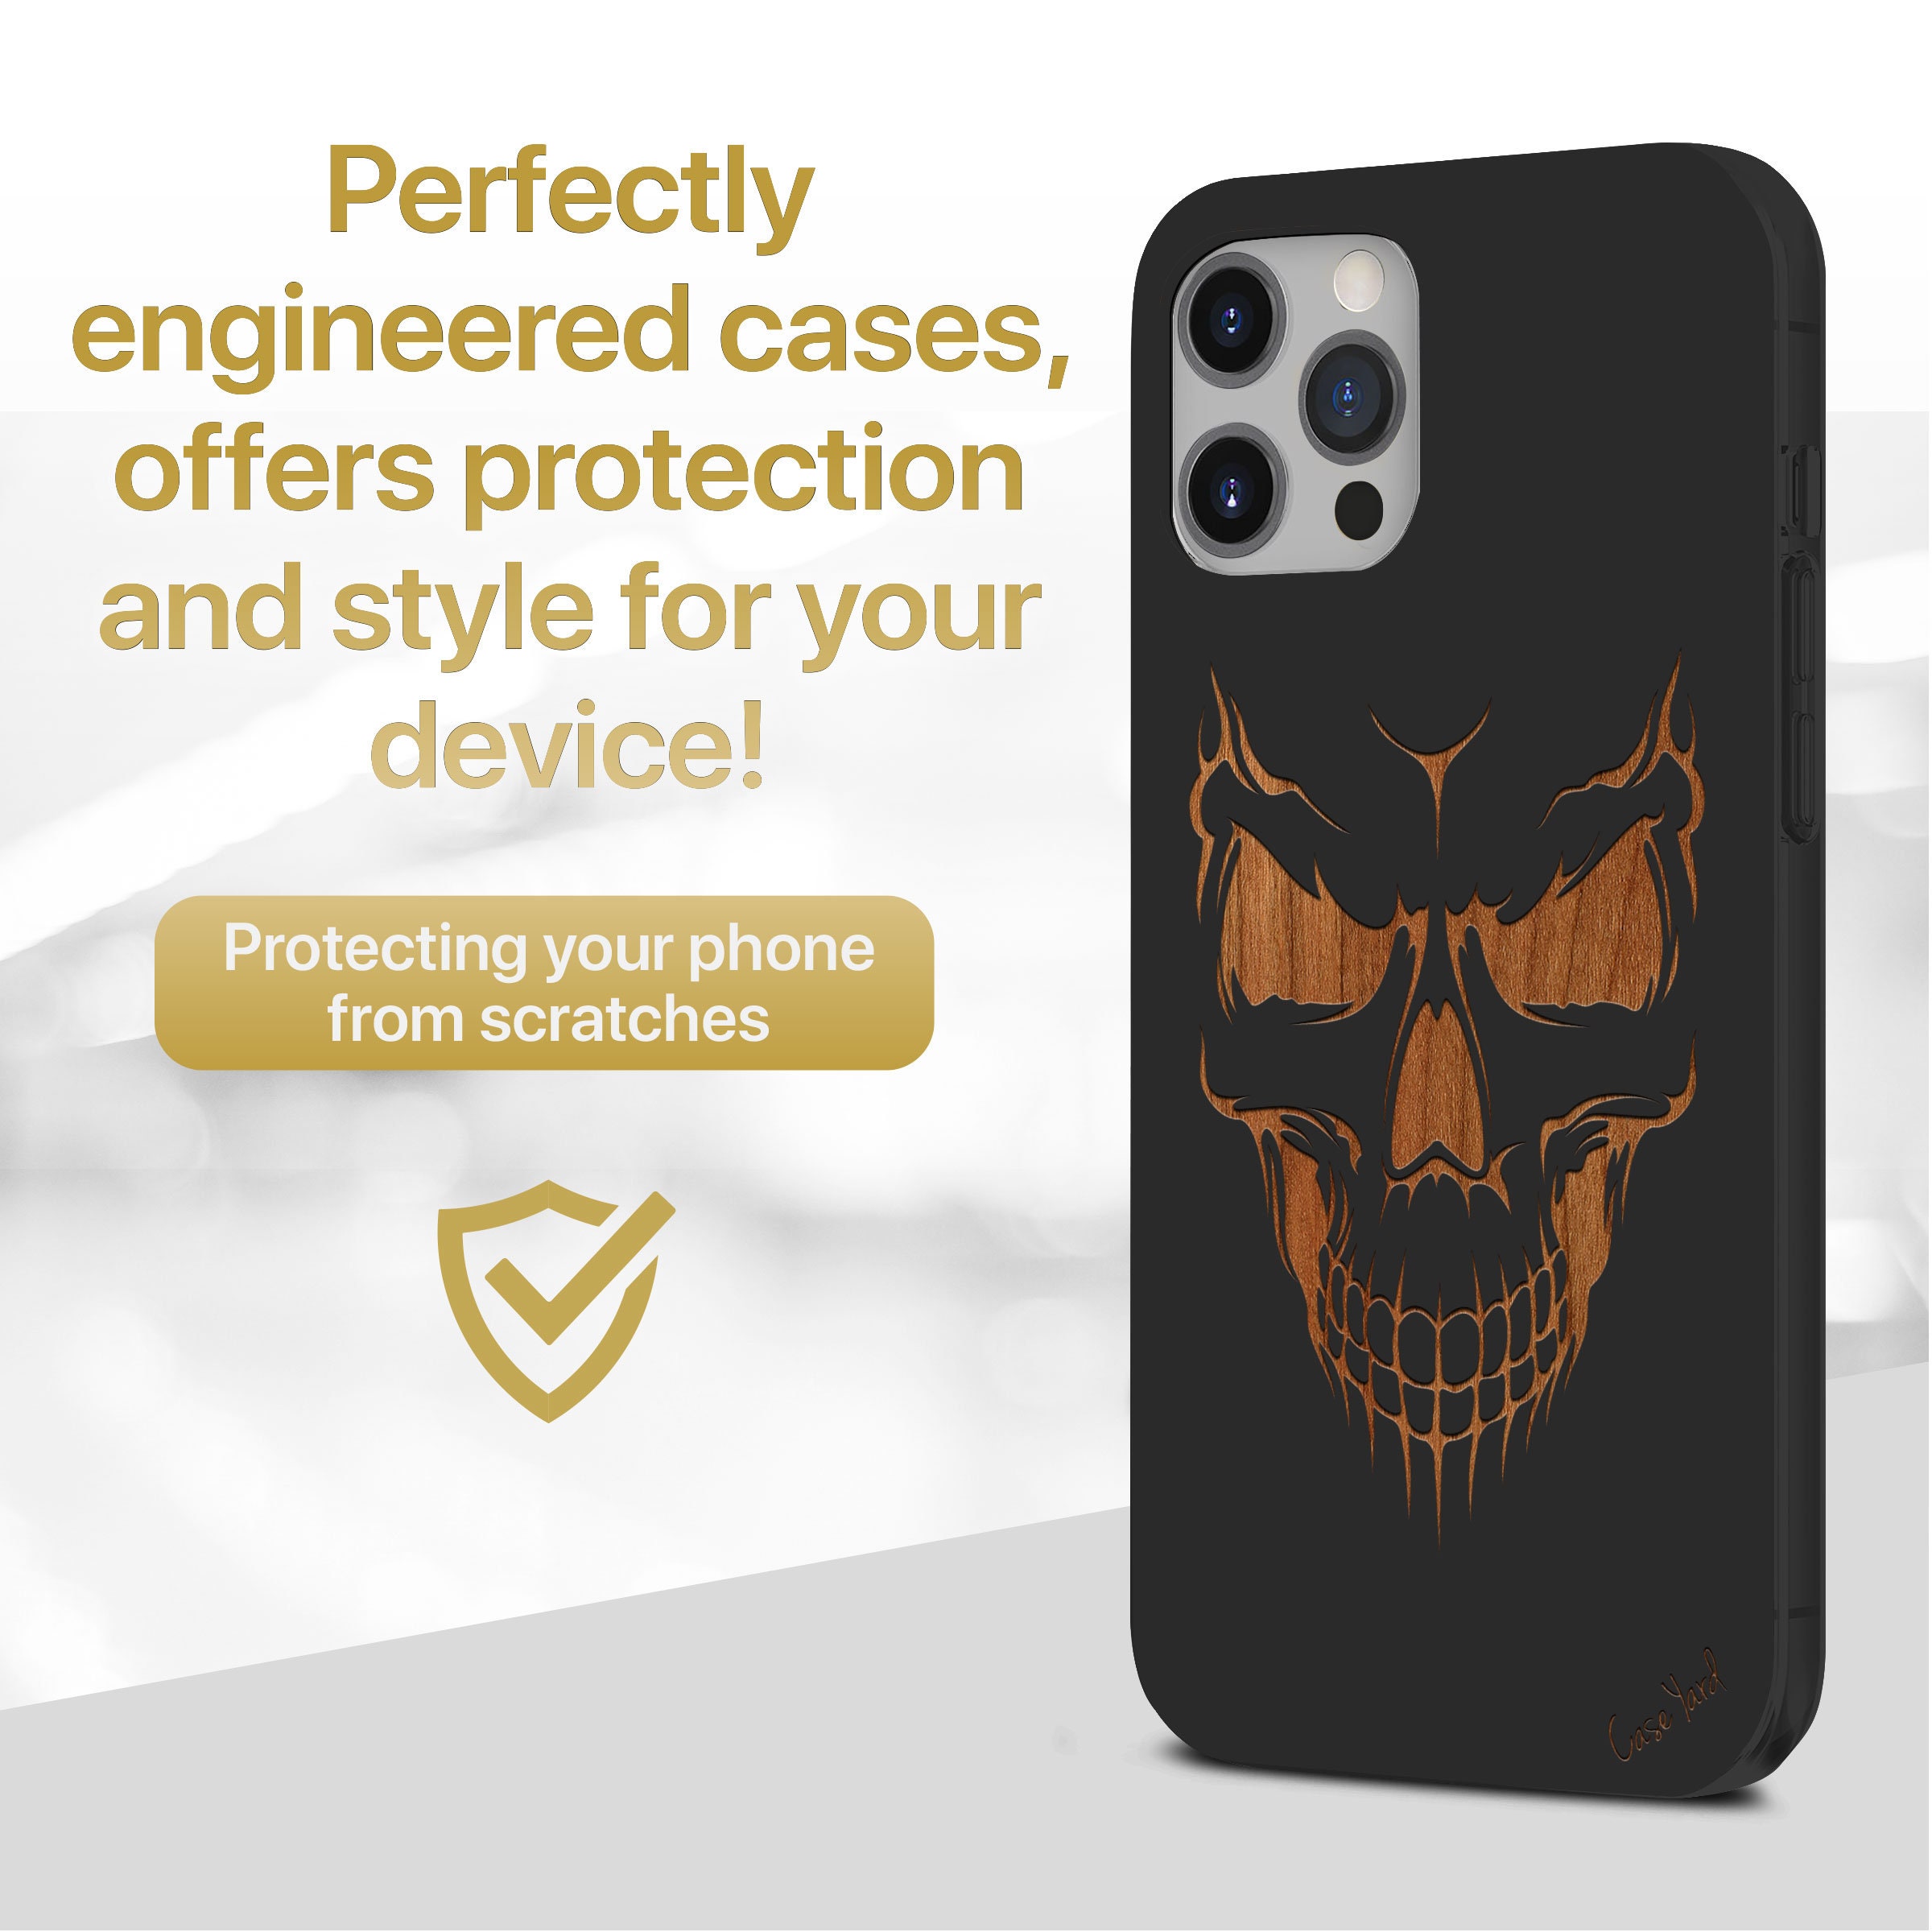 iPhone Wood Case iPhone 12 11 Pro Max Xsmax Xs Xr X SE 10 8 Plus Wood Case Samsung S10 Plus Edge S9 S8 Protective Skull Pattern Design